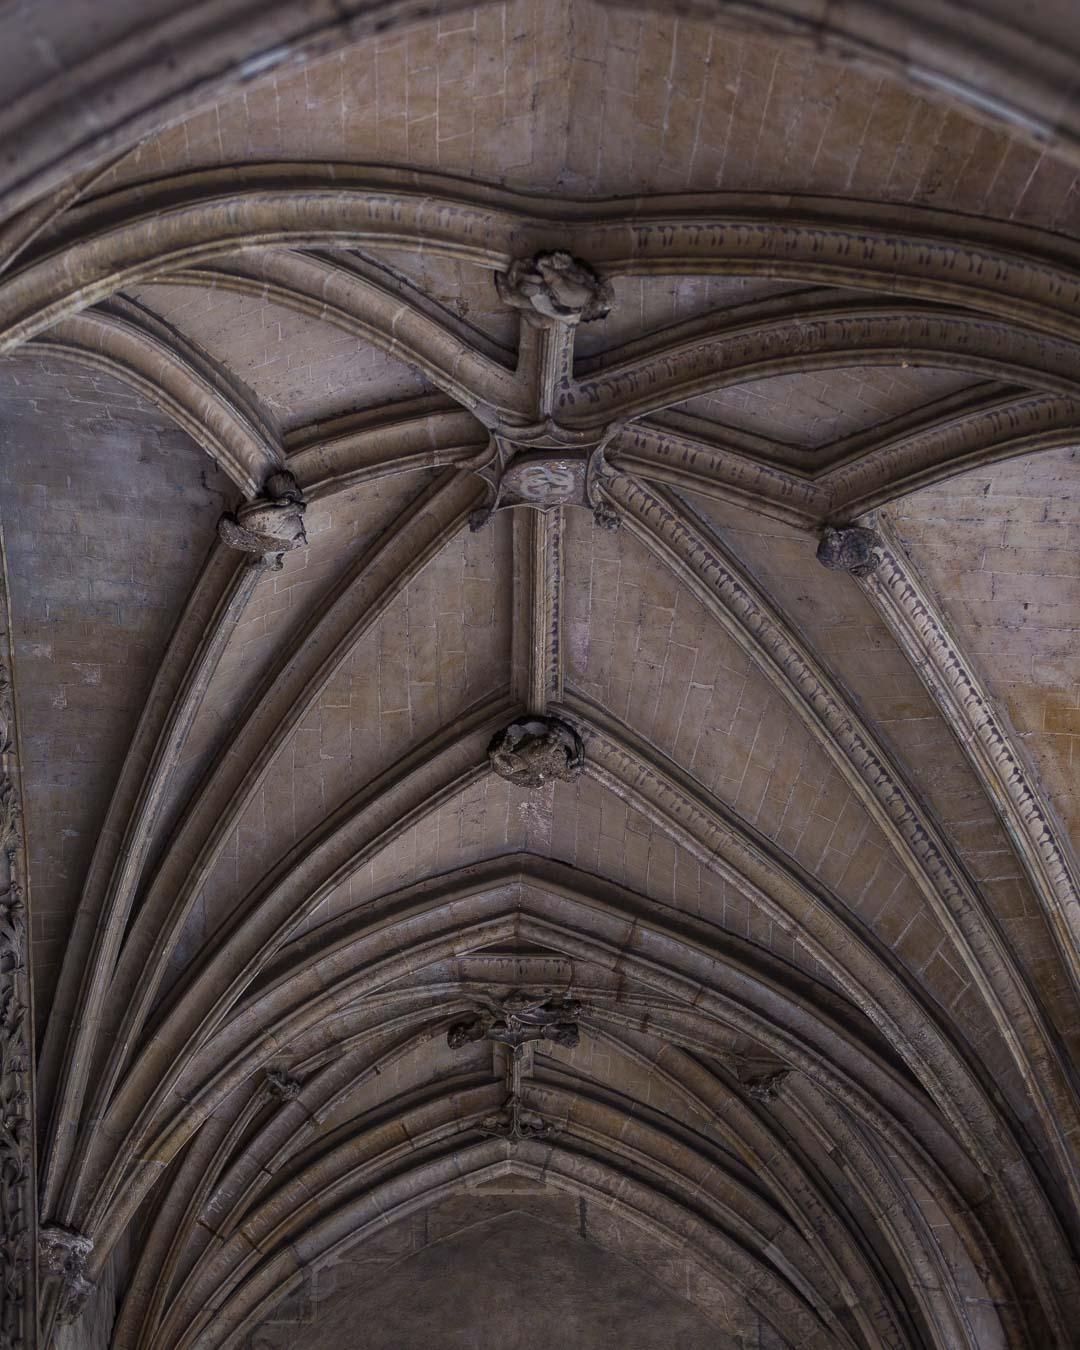 arches of the entrance of saint germain l'auxerrois